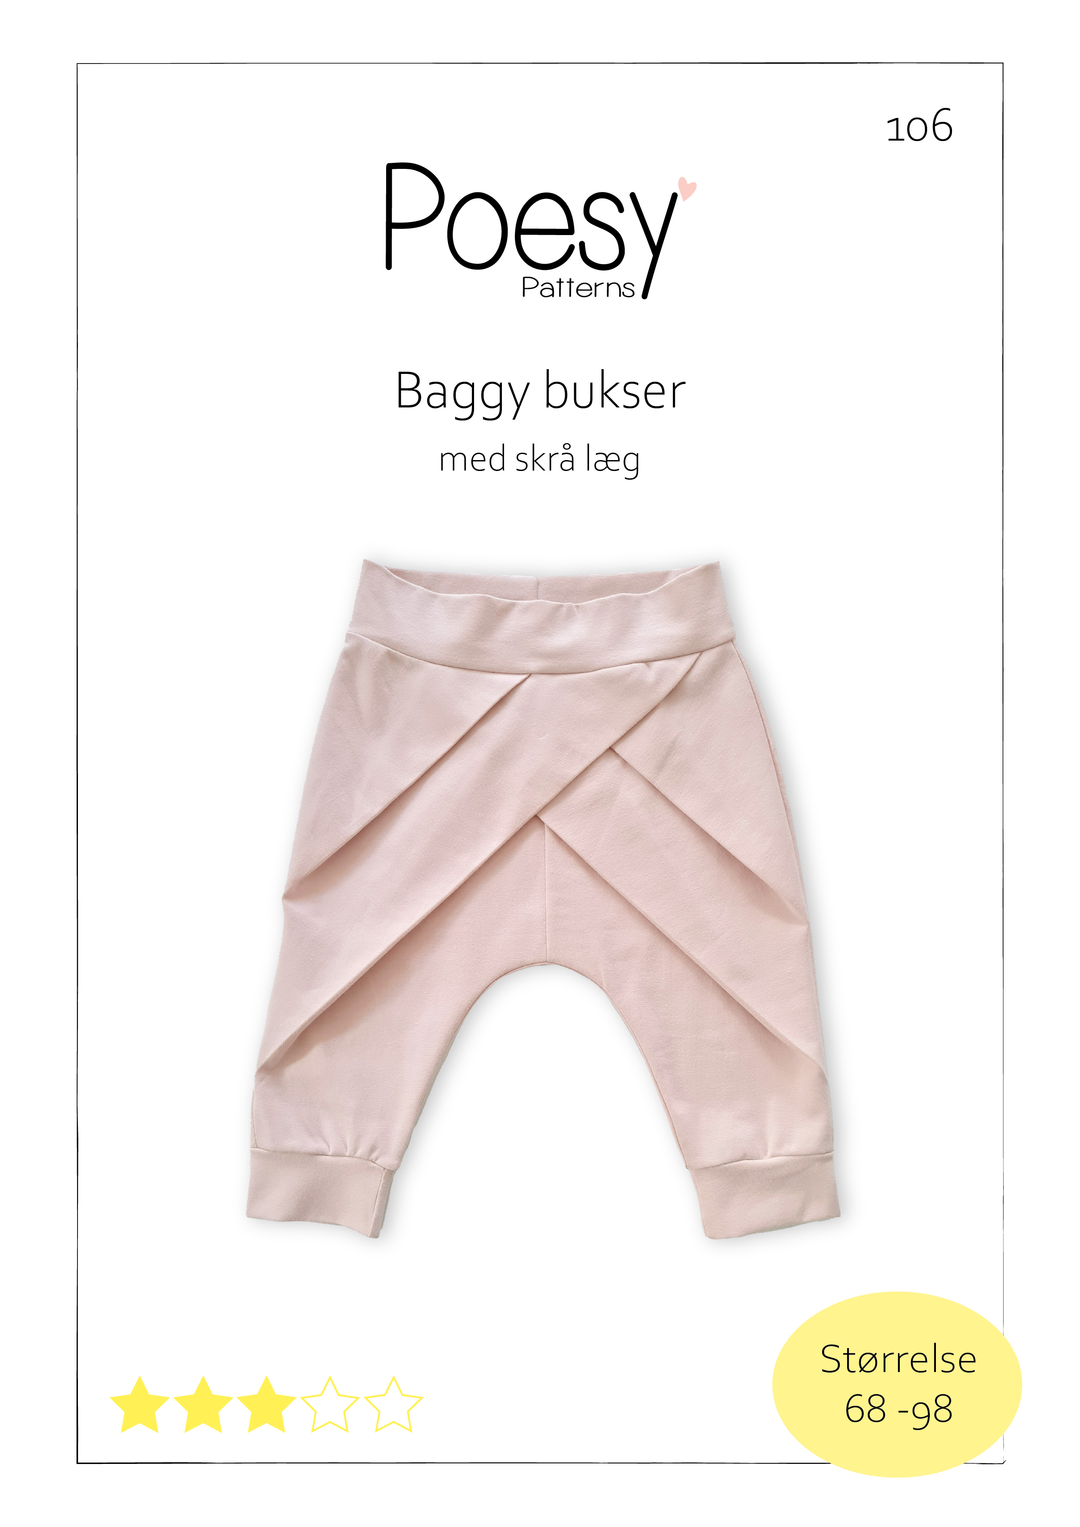 Baggy bukser med skrå læg 106 Poesy patterns